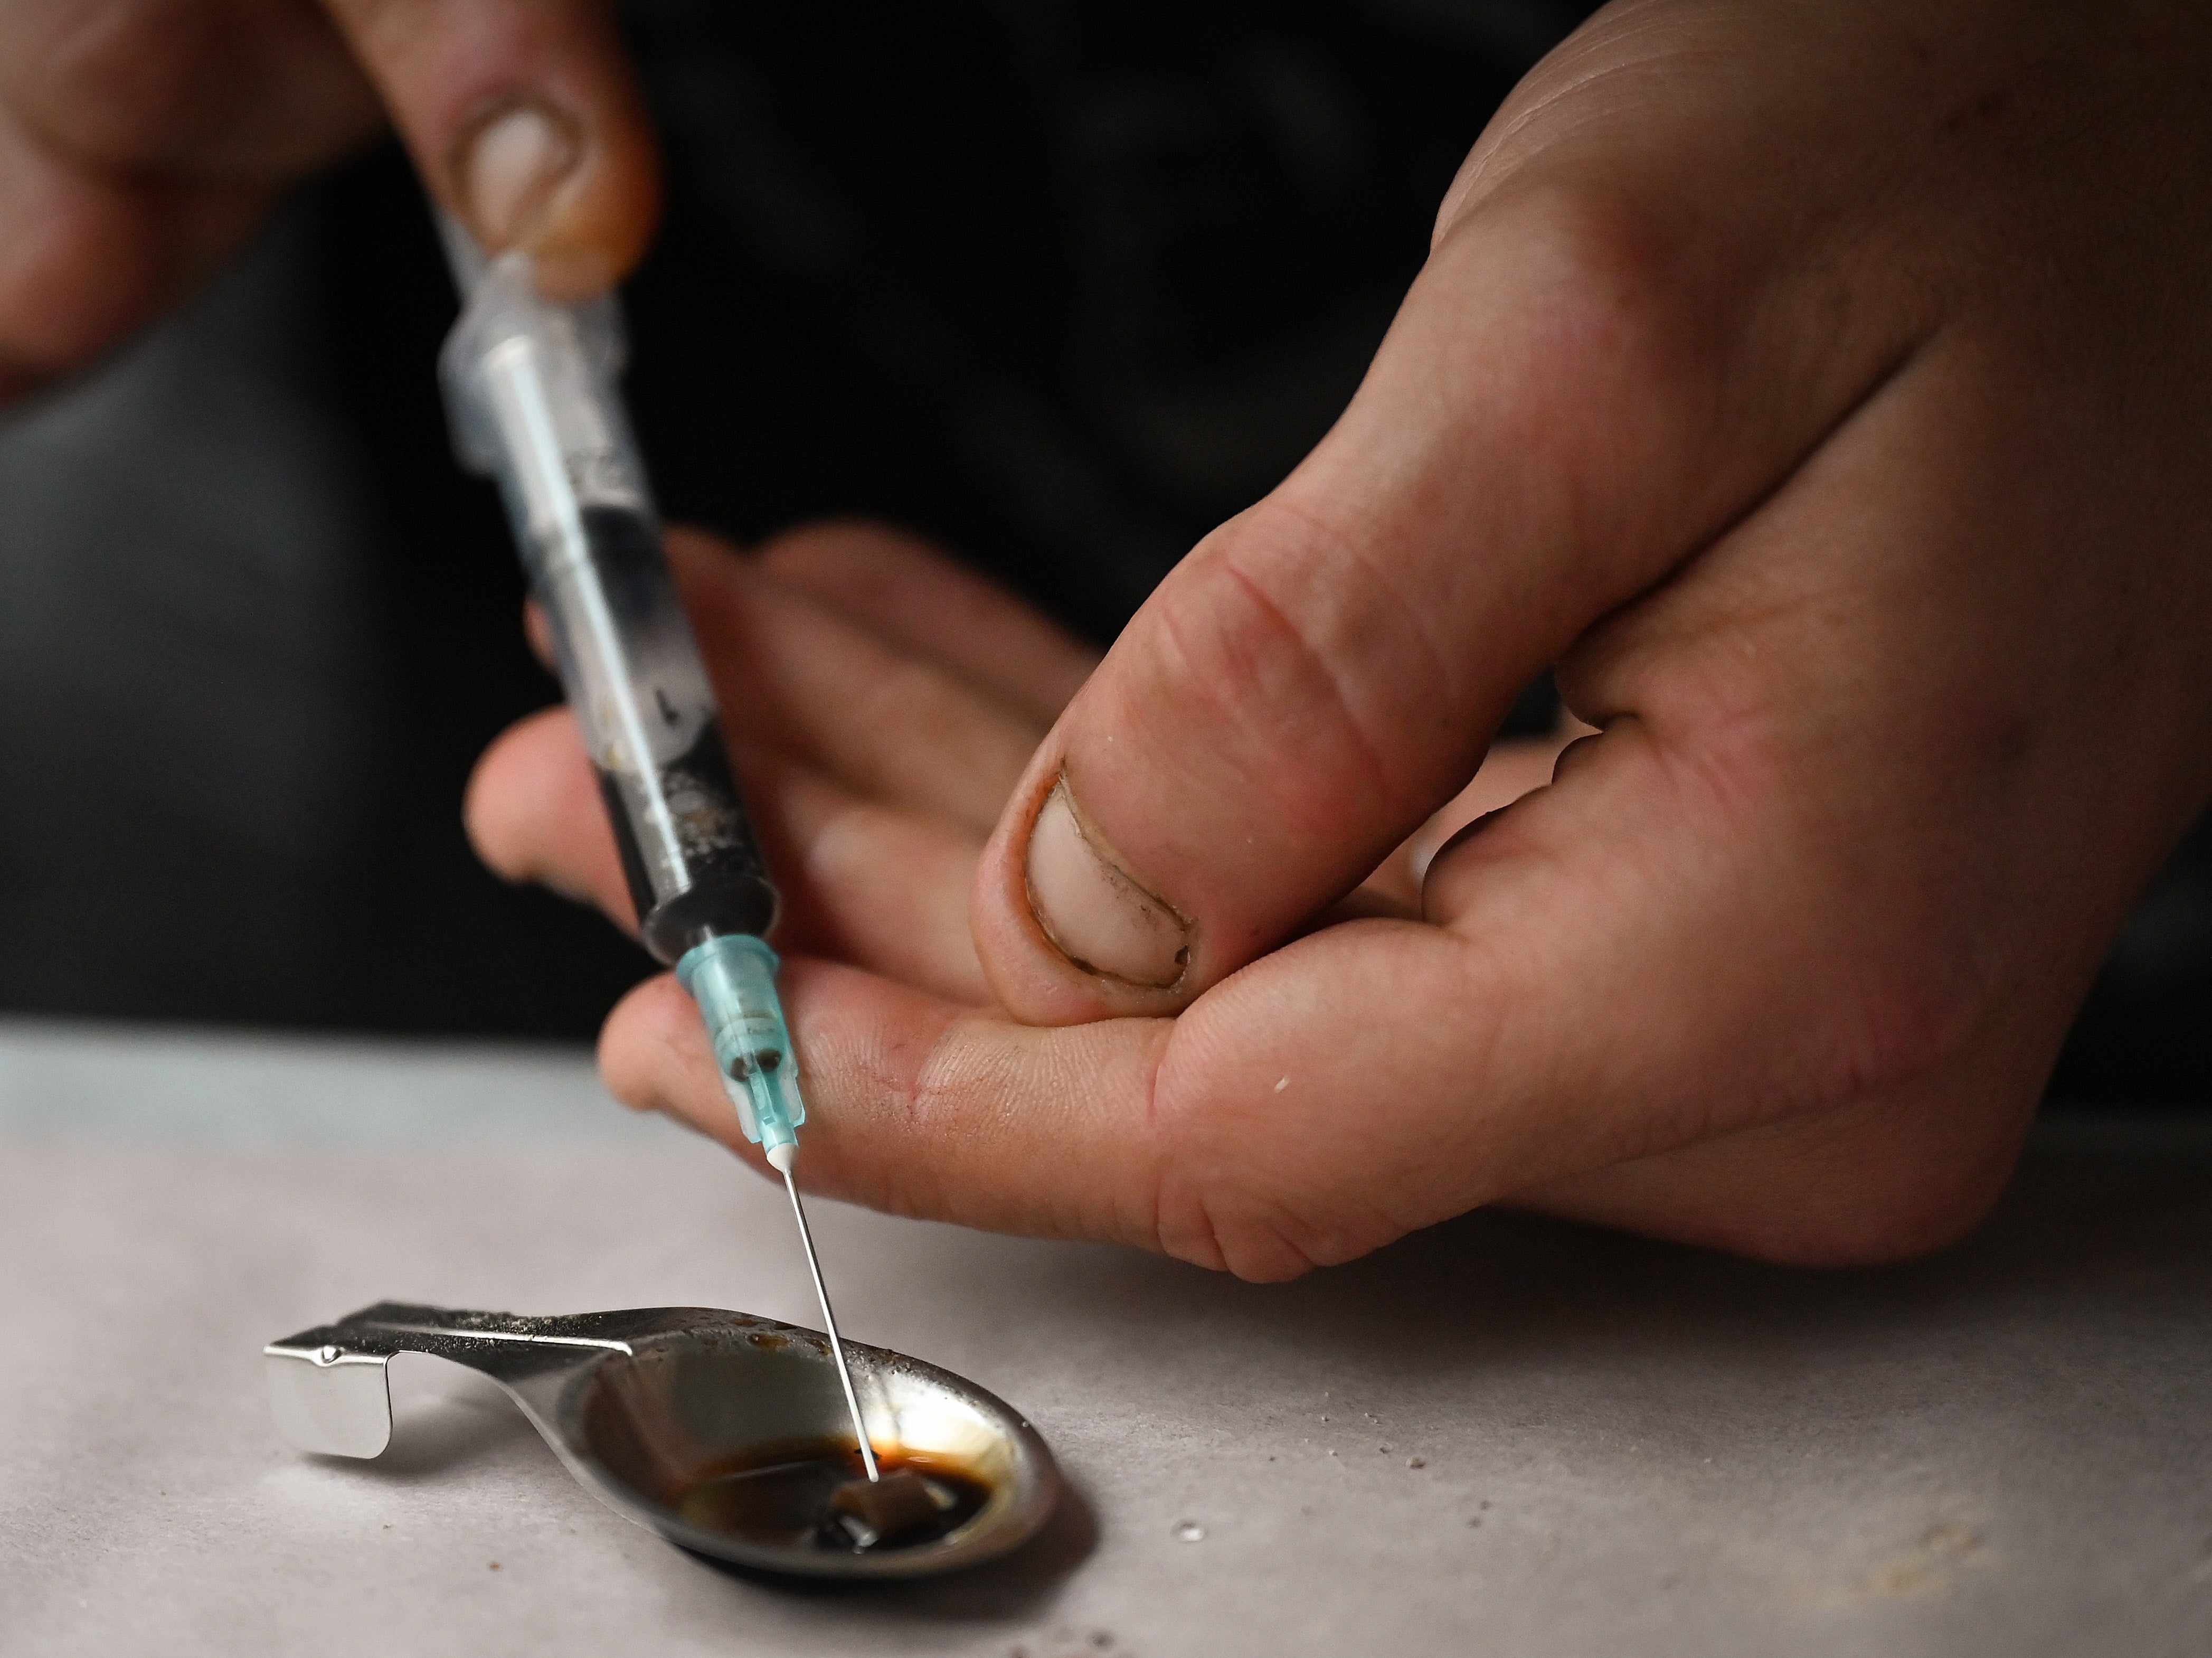 Drug users prepare heroin before injecting, inside of a Safe Consumption van set up by Peter Krykant